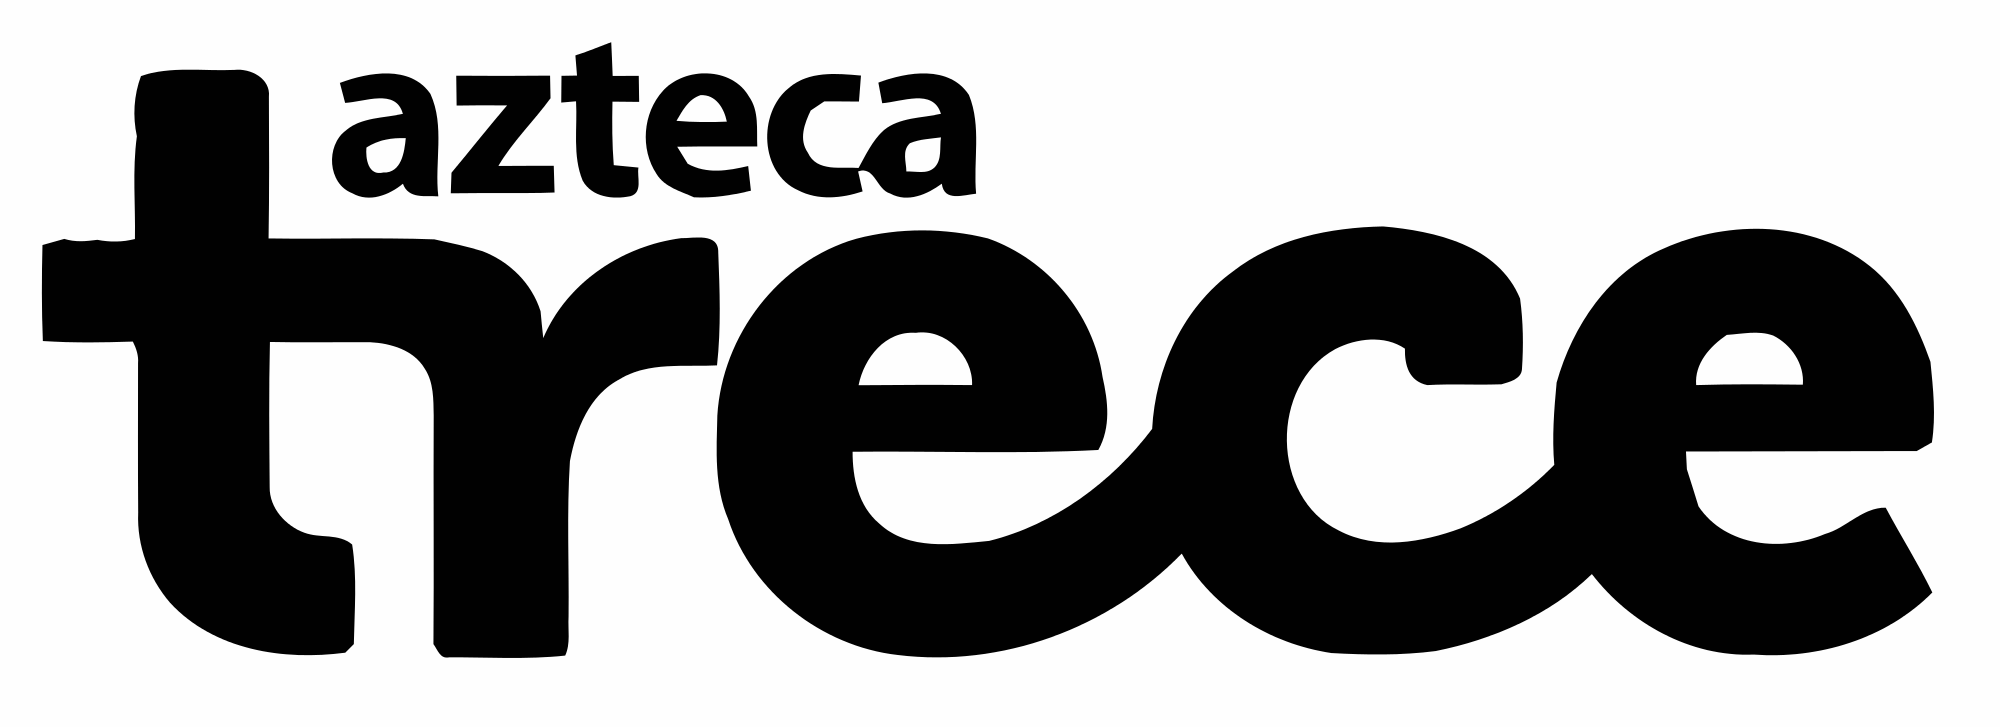 Trece Logo - File:Logo Azteca Trece 2015.svg - Wikimedia Commons